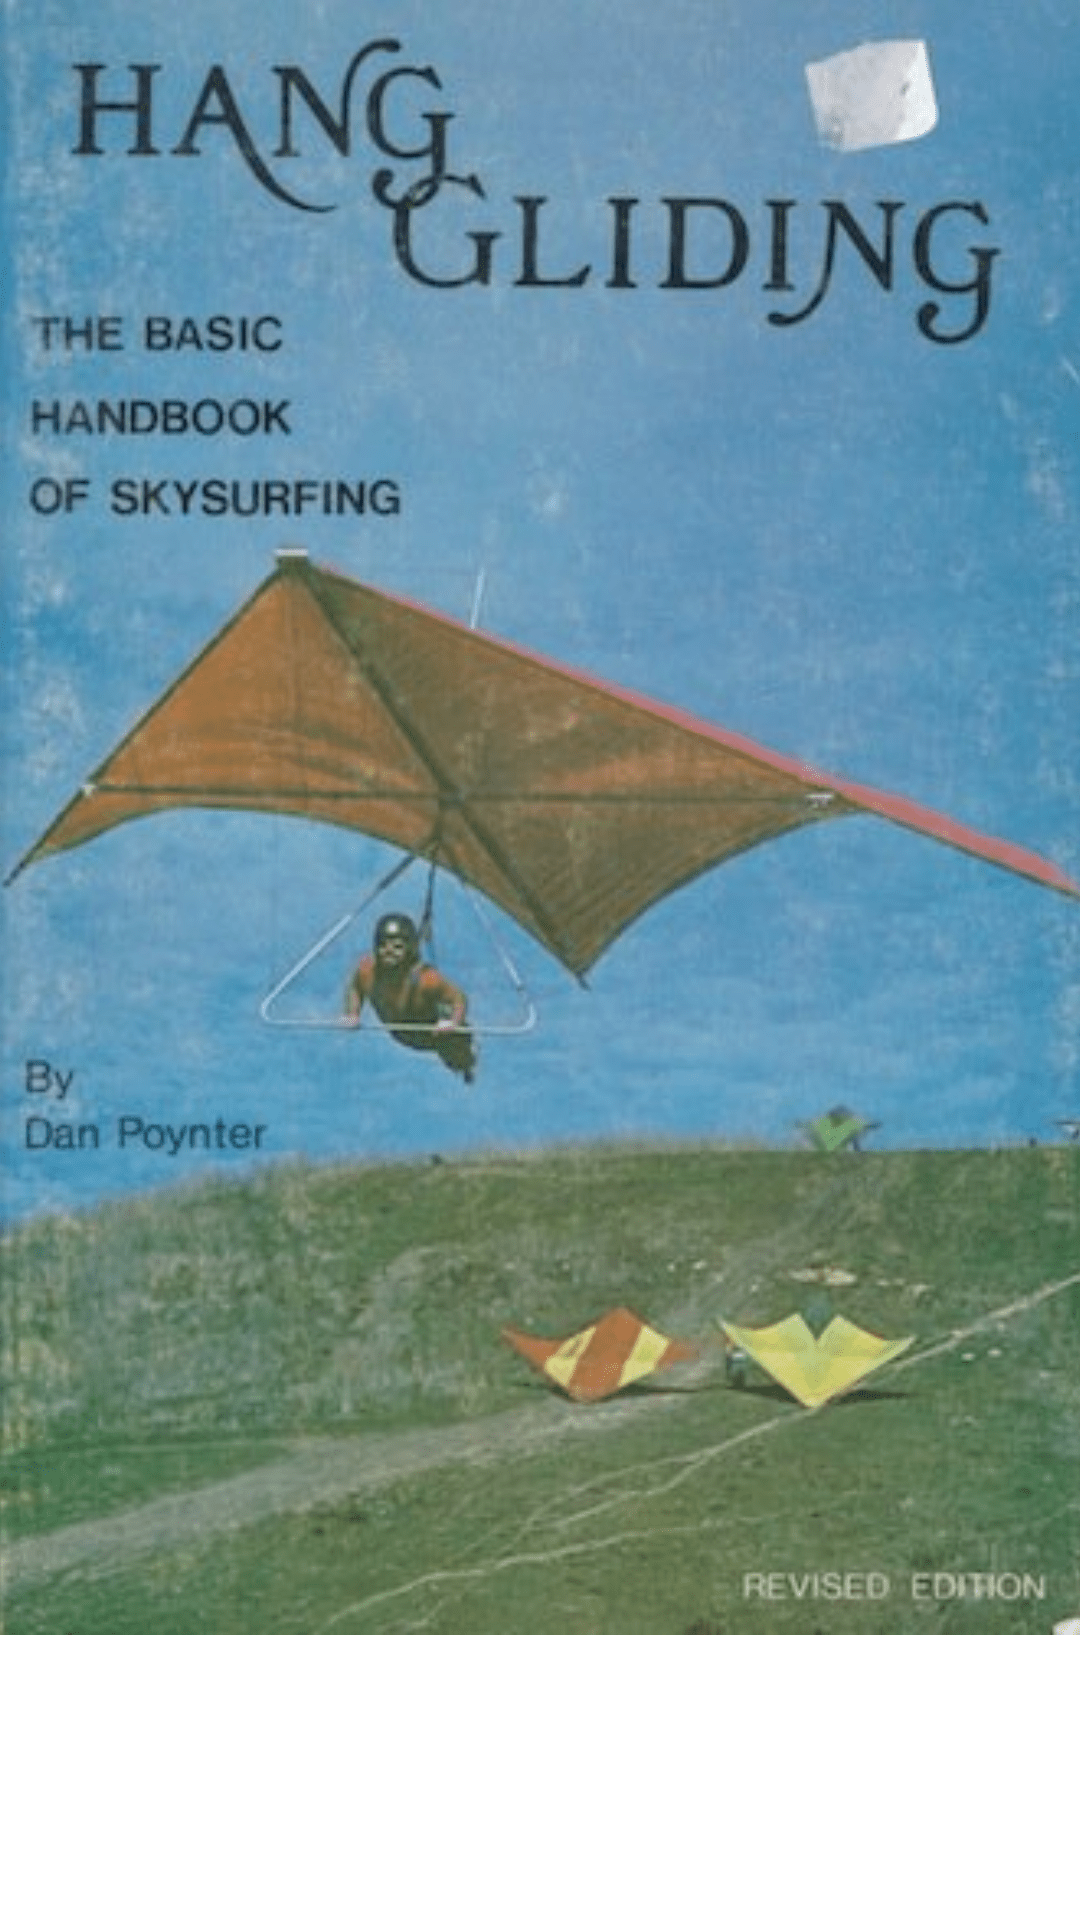 Hang gliding: The basic handbook of skysurfing